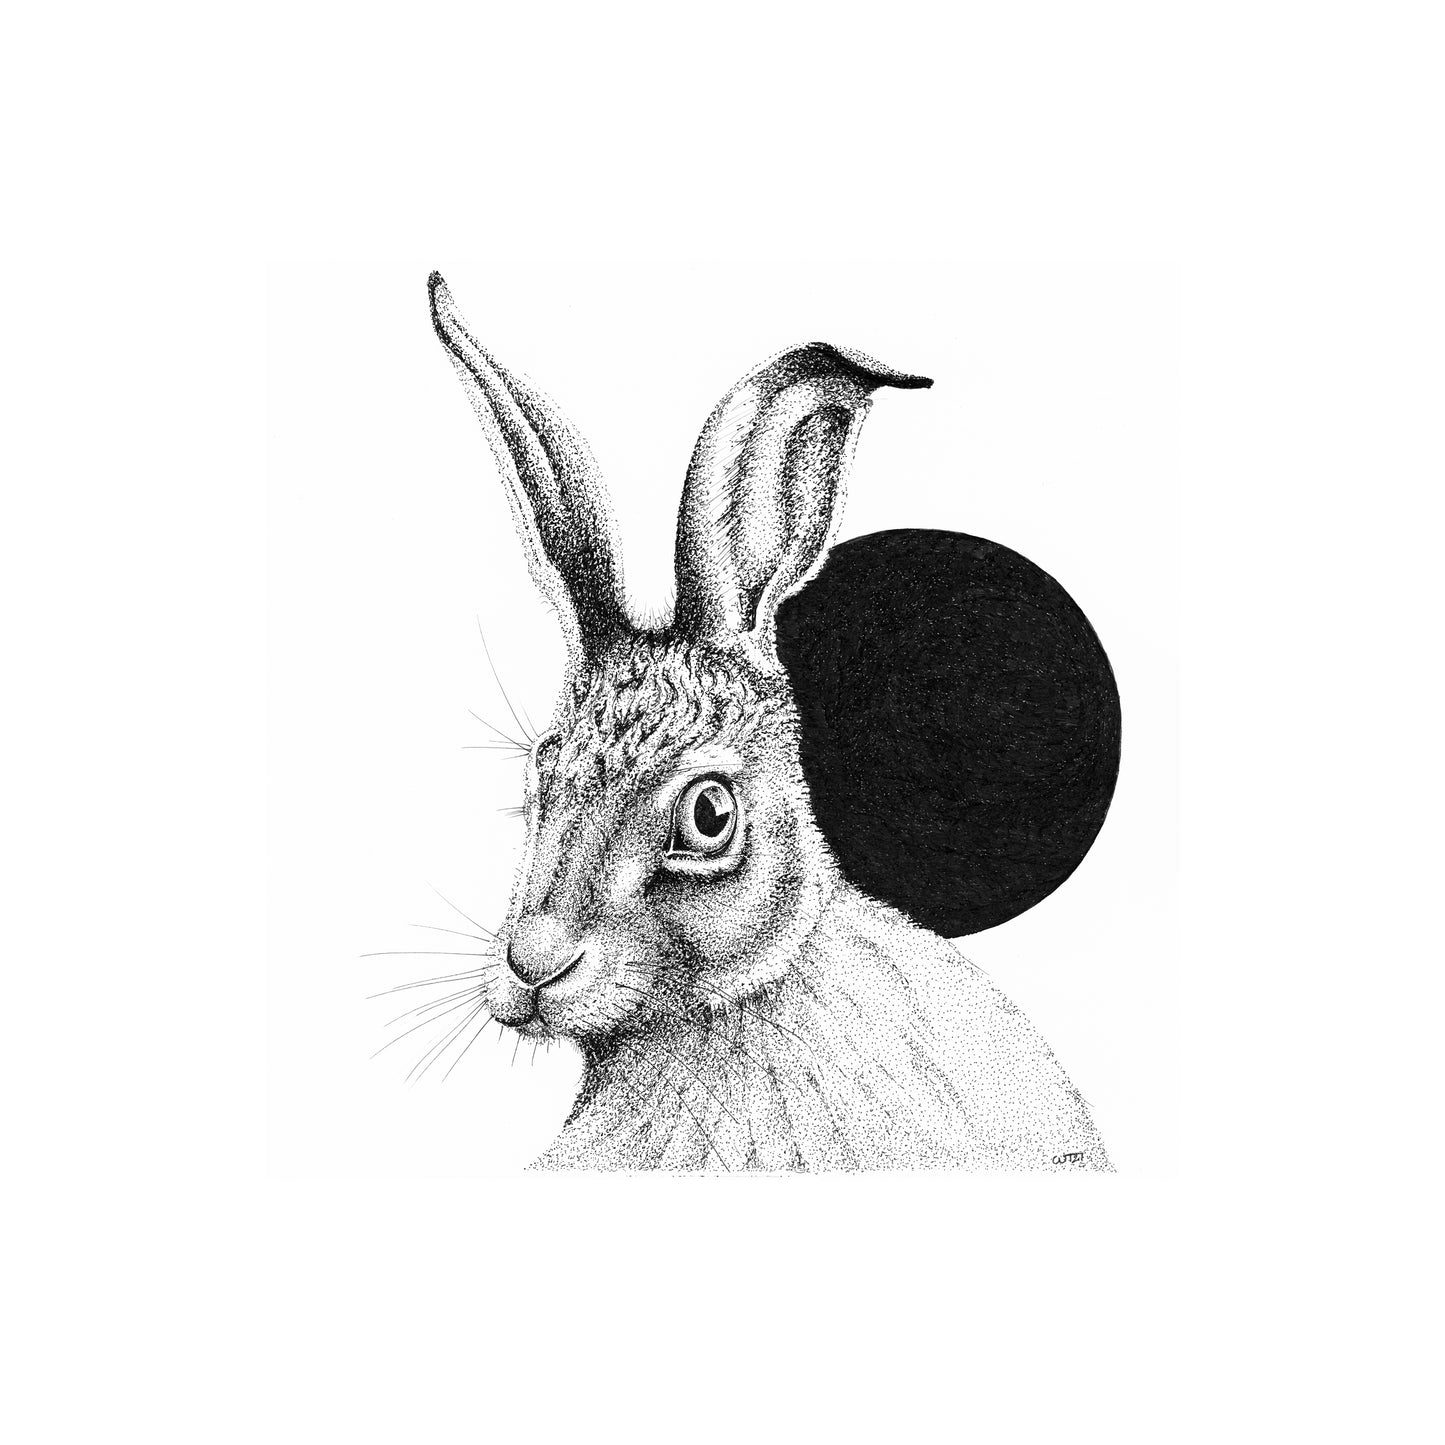 Moon Hare